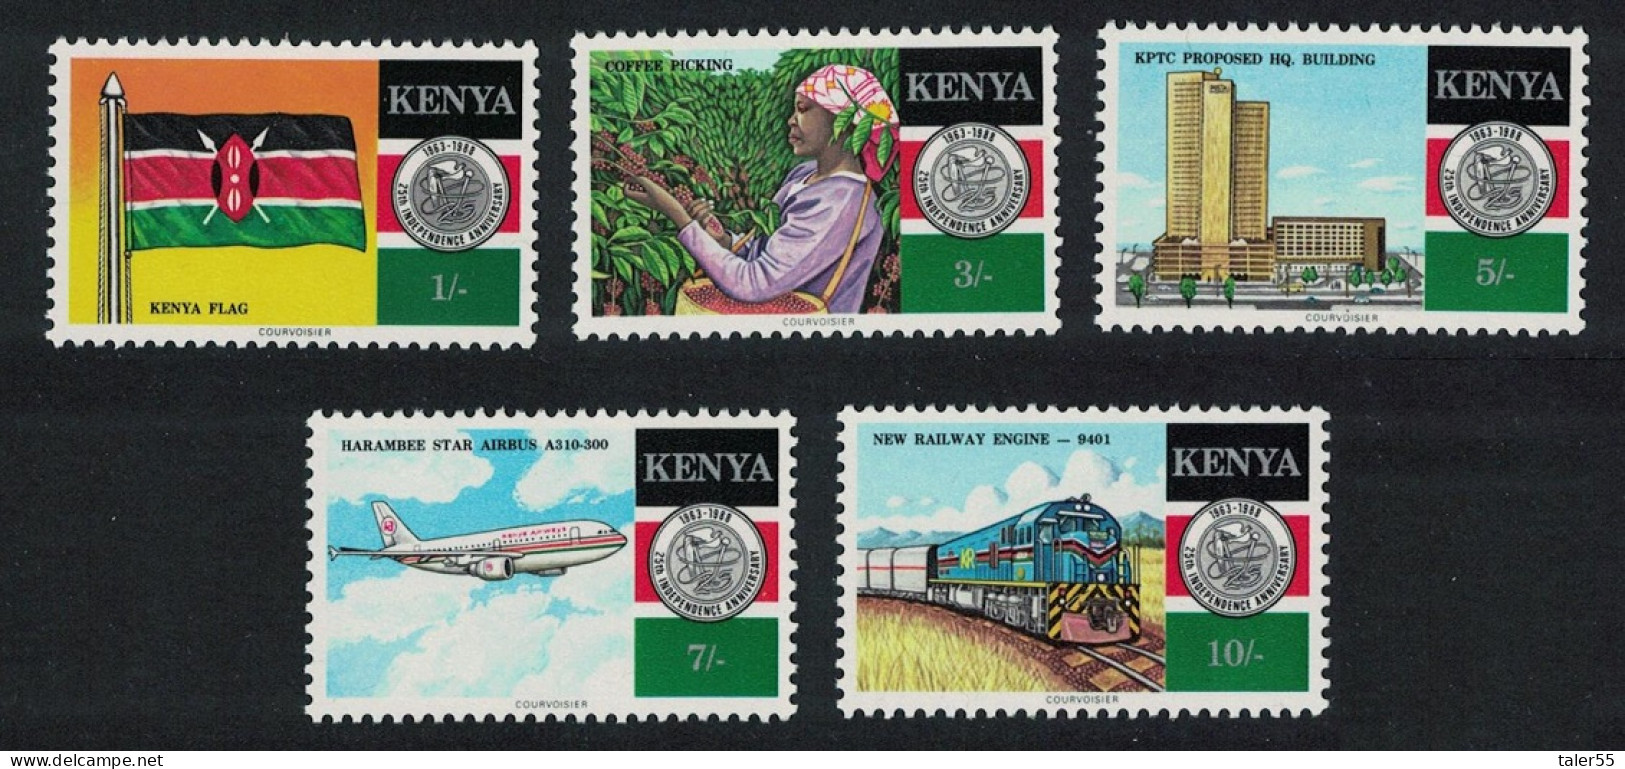 Kenya 25th Anniversary Of Independence 5v 1988 MNH SG#486-490 - Kenya (1963-...)